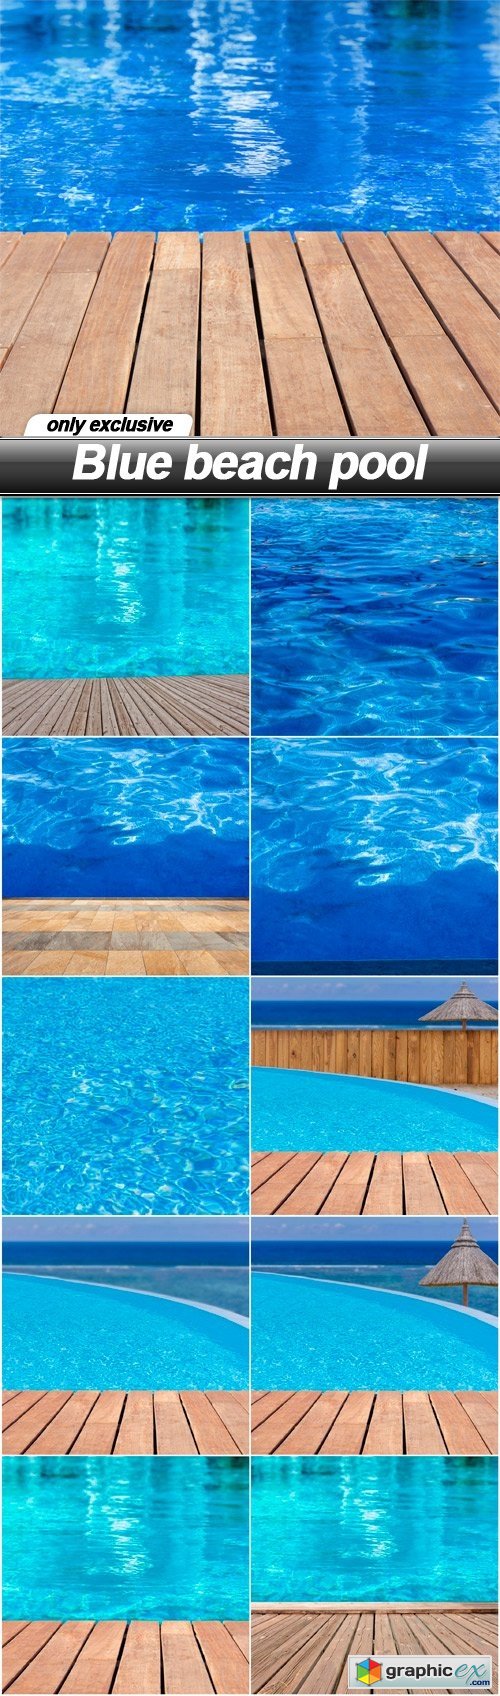 Blue beach pool - 11 UHQ JPEG